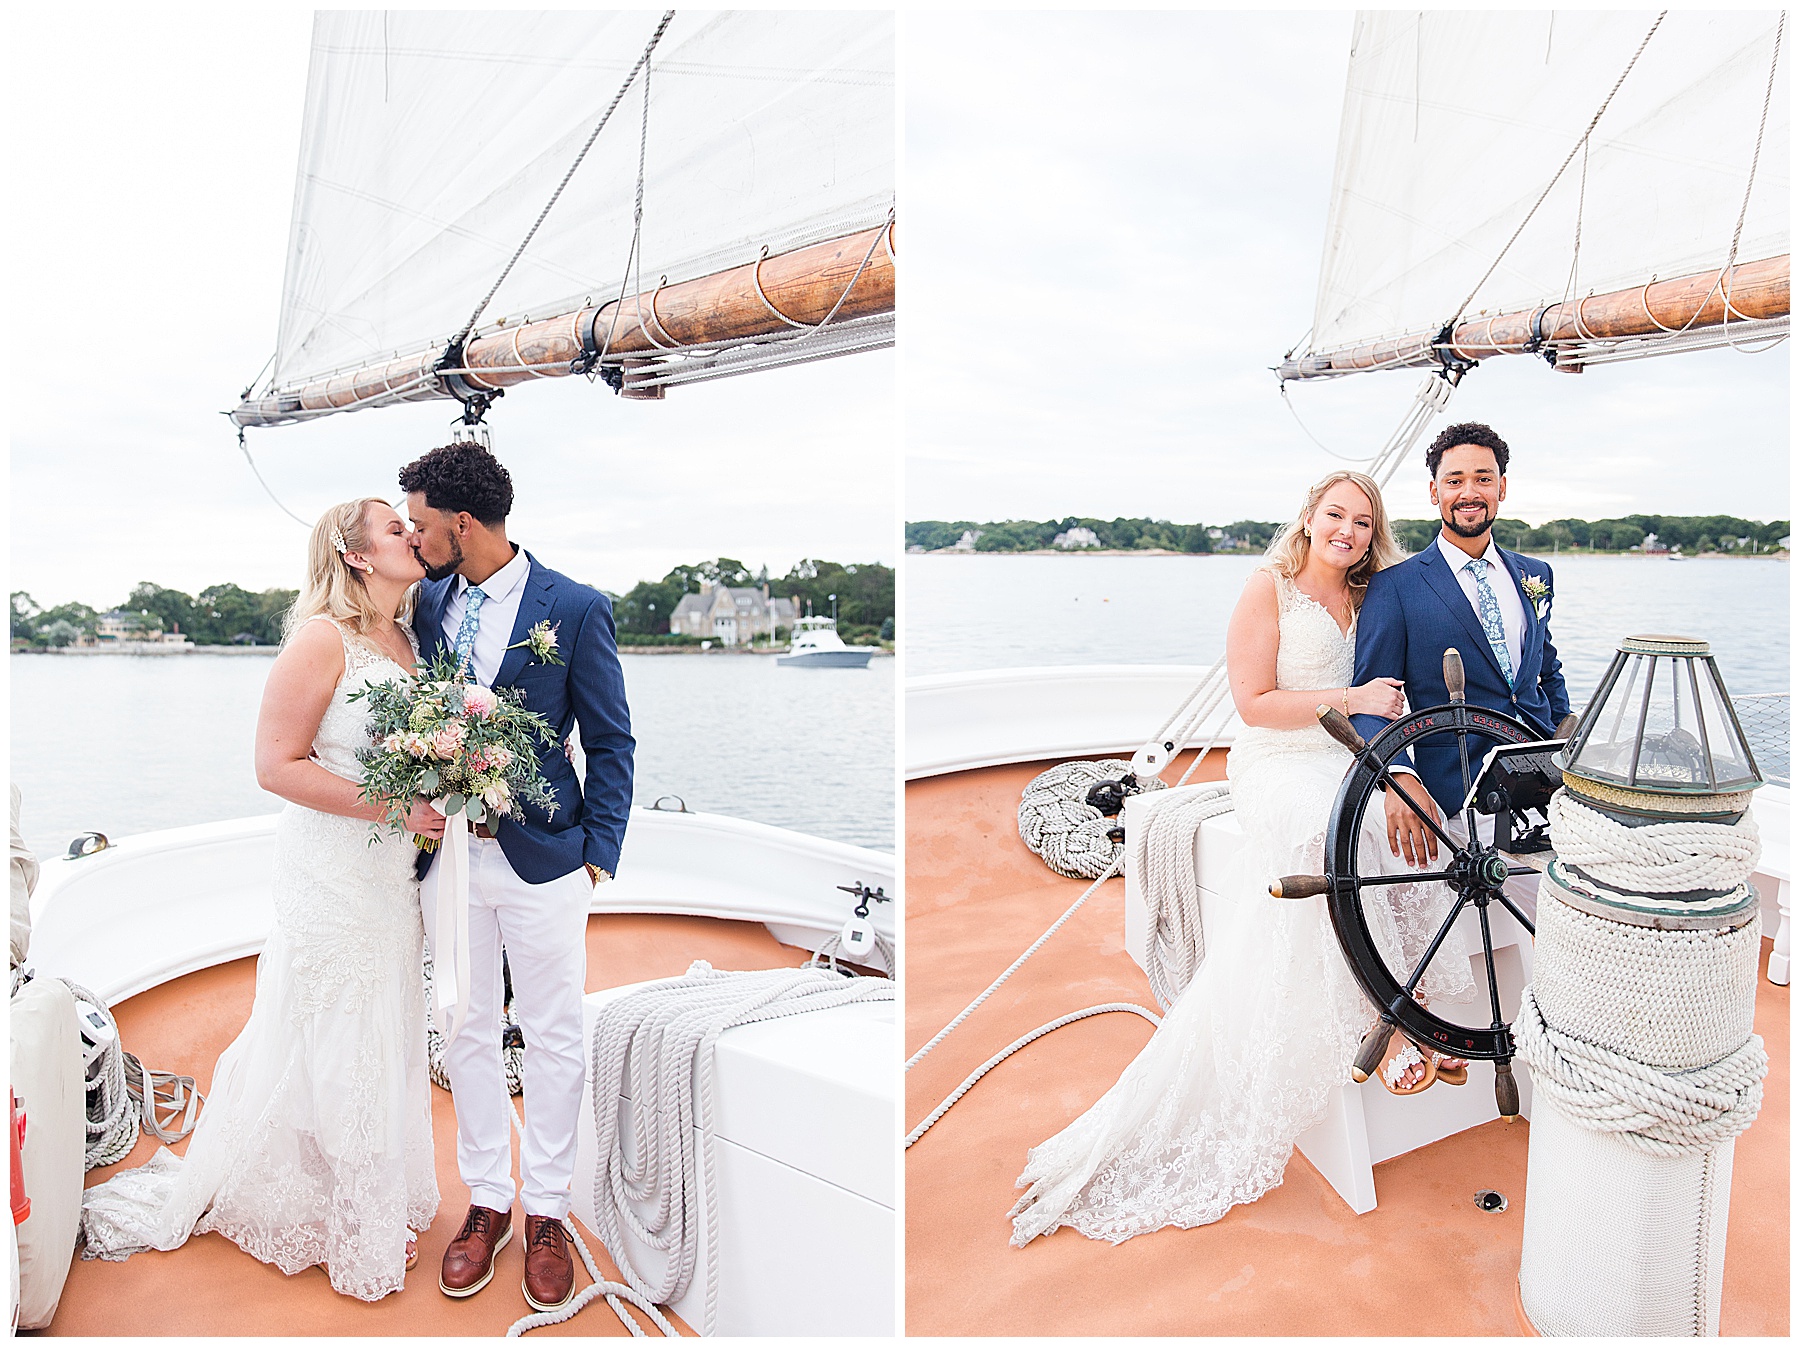 Boat Wedding Photos